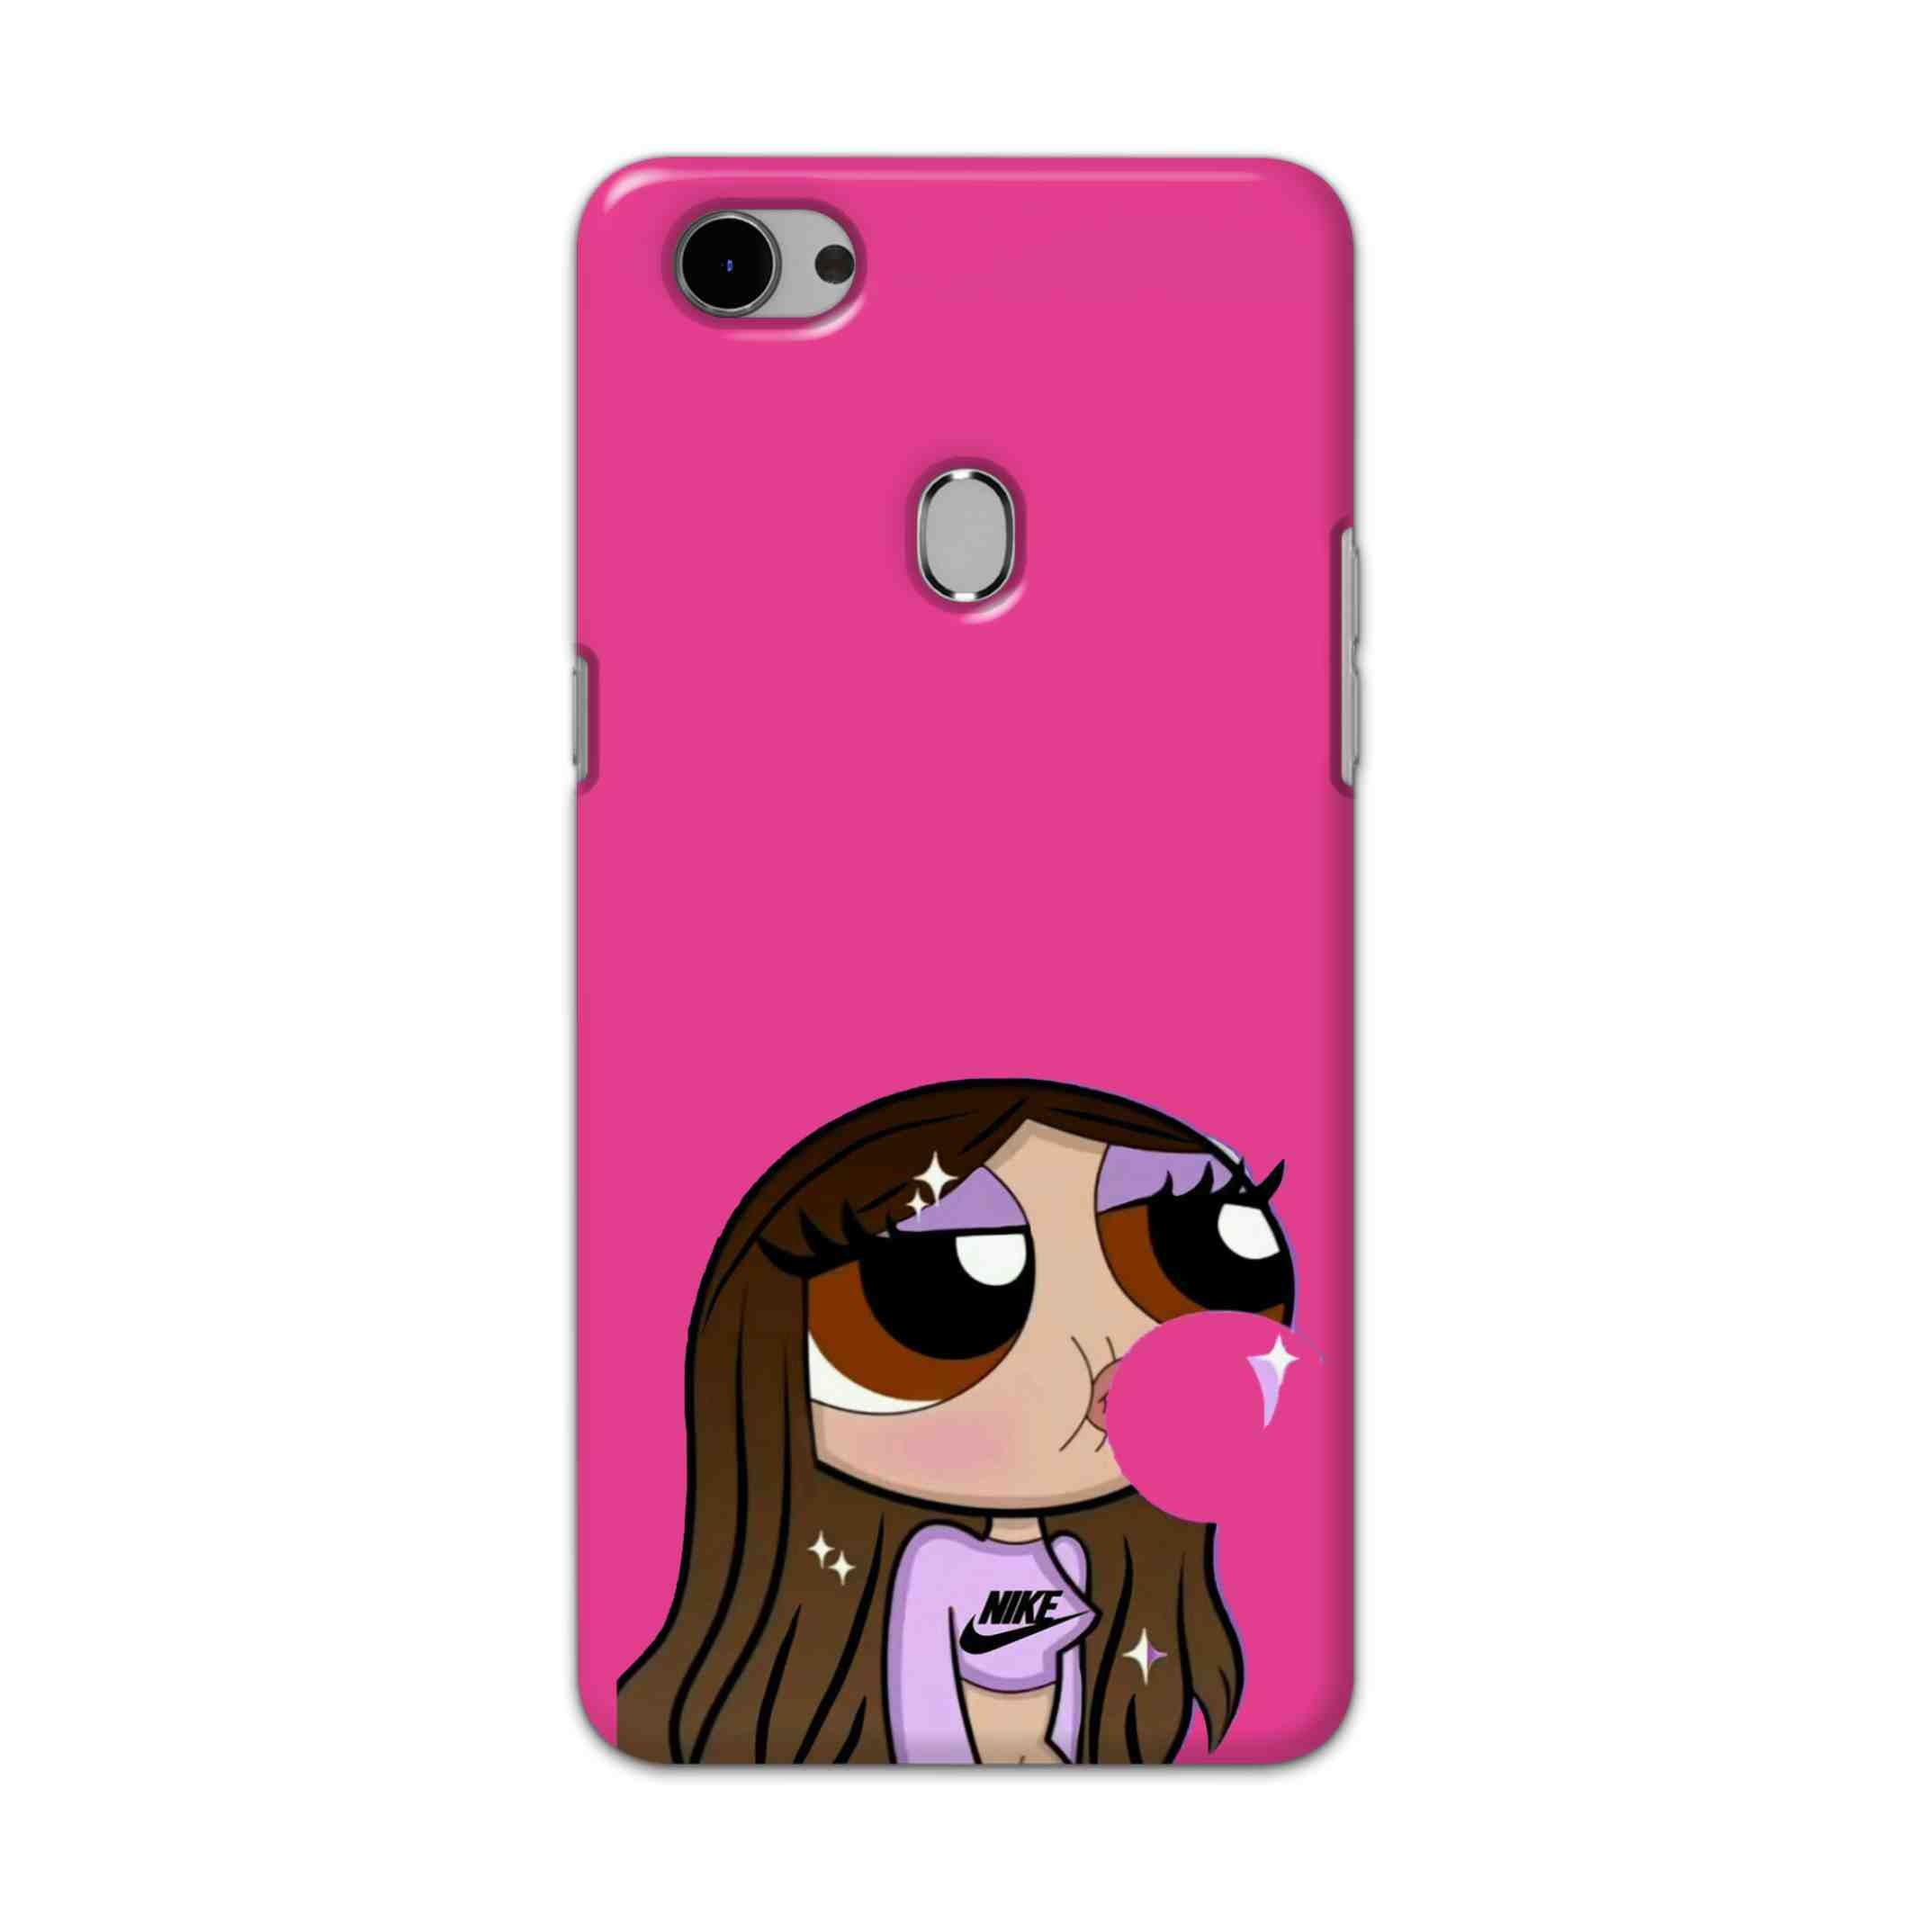 Buy Bubble Girl Hard Back Mobile Phone Case Cover For Oppo F7 Online